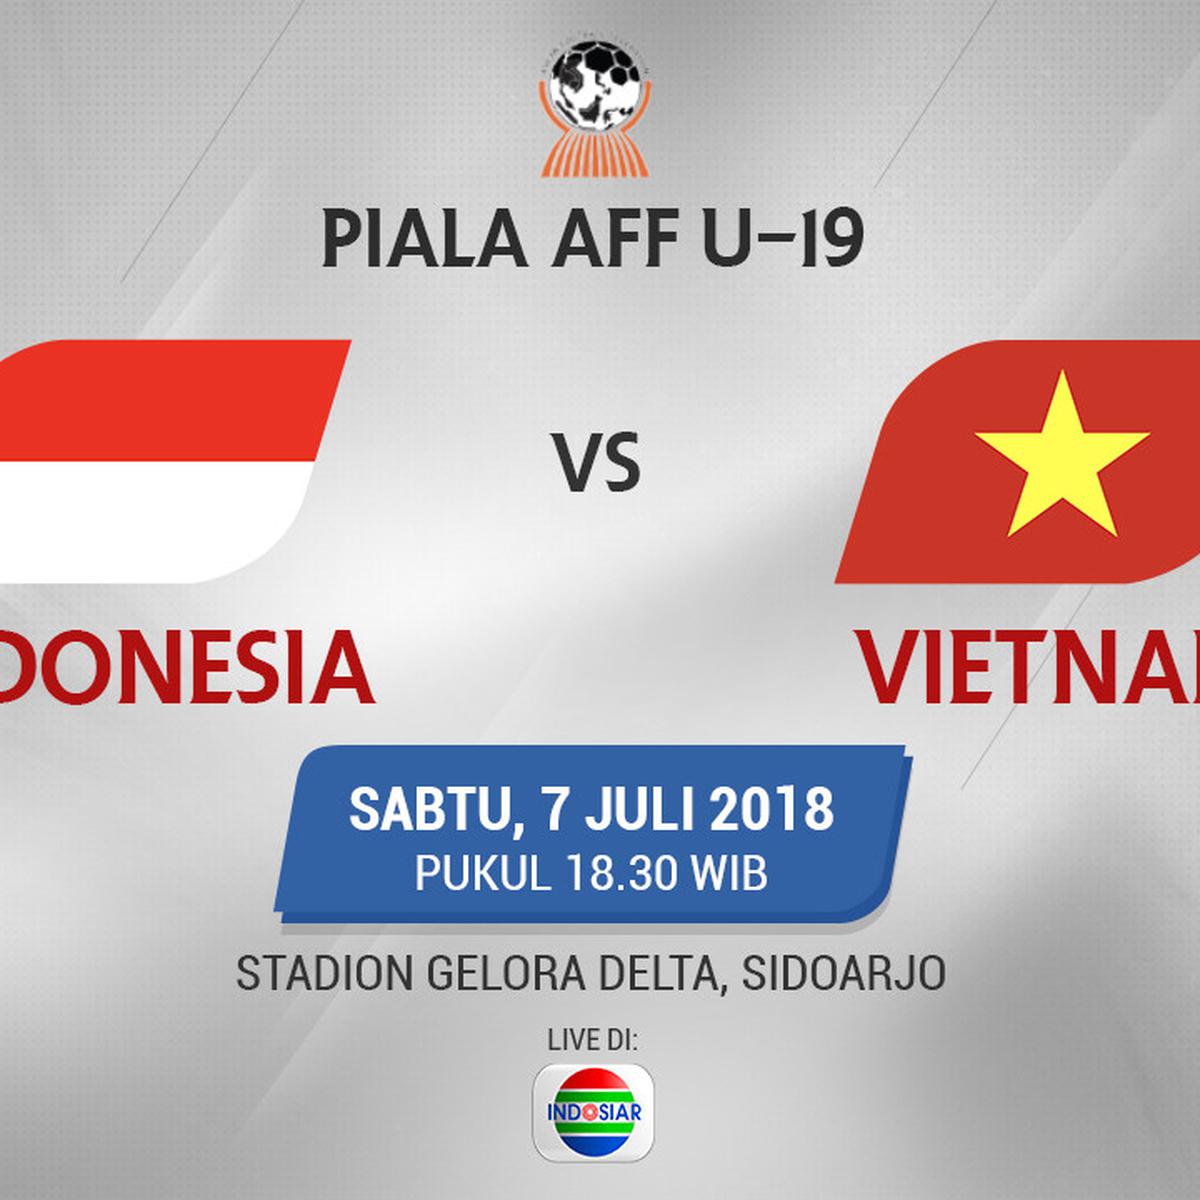 Indonesia vs vietnam live streaming bola. Vietnam vs Indonesia. Live streaming Indonesia vs Vietnam. Вьетнам Индонезия. Live Bola Indonesia.